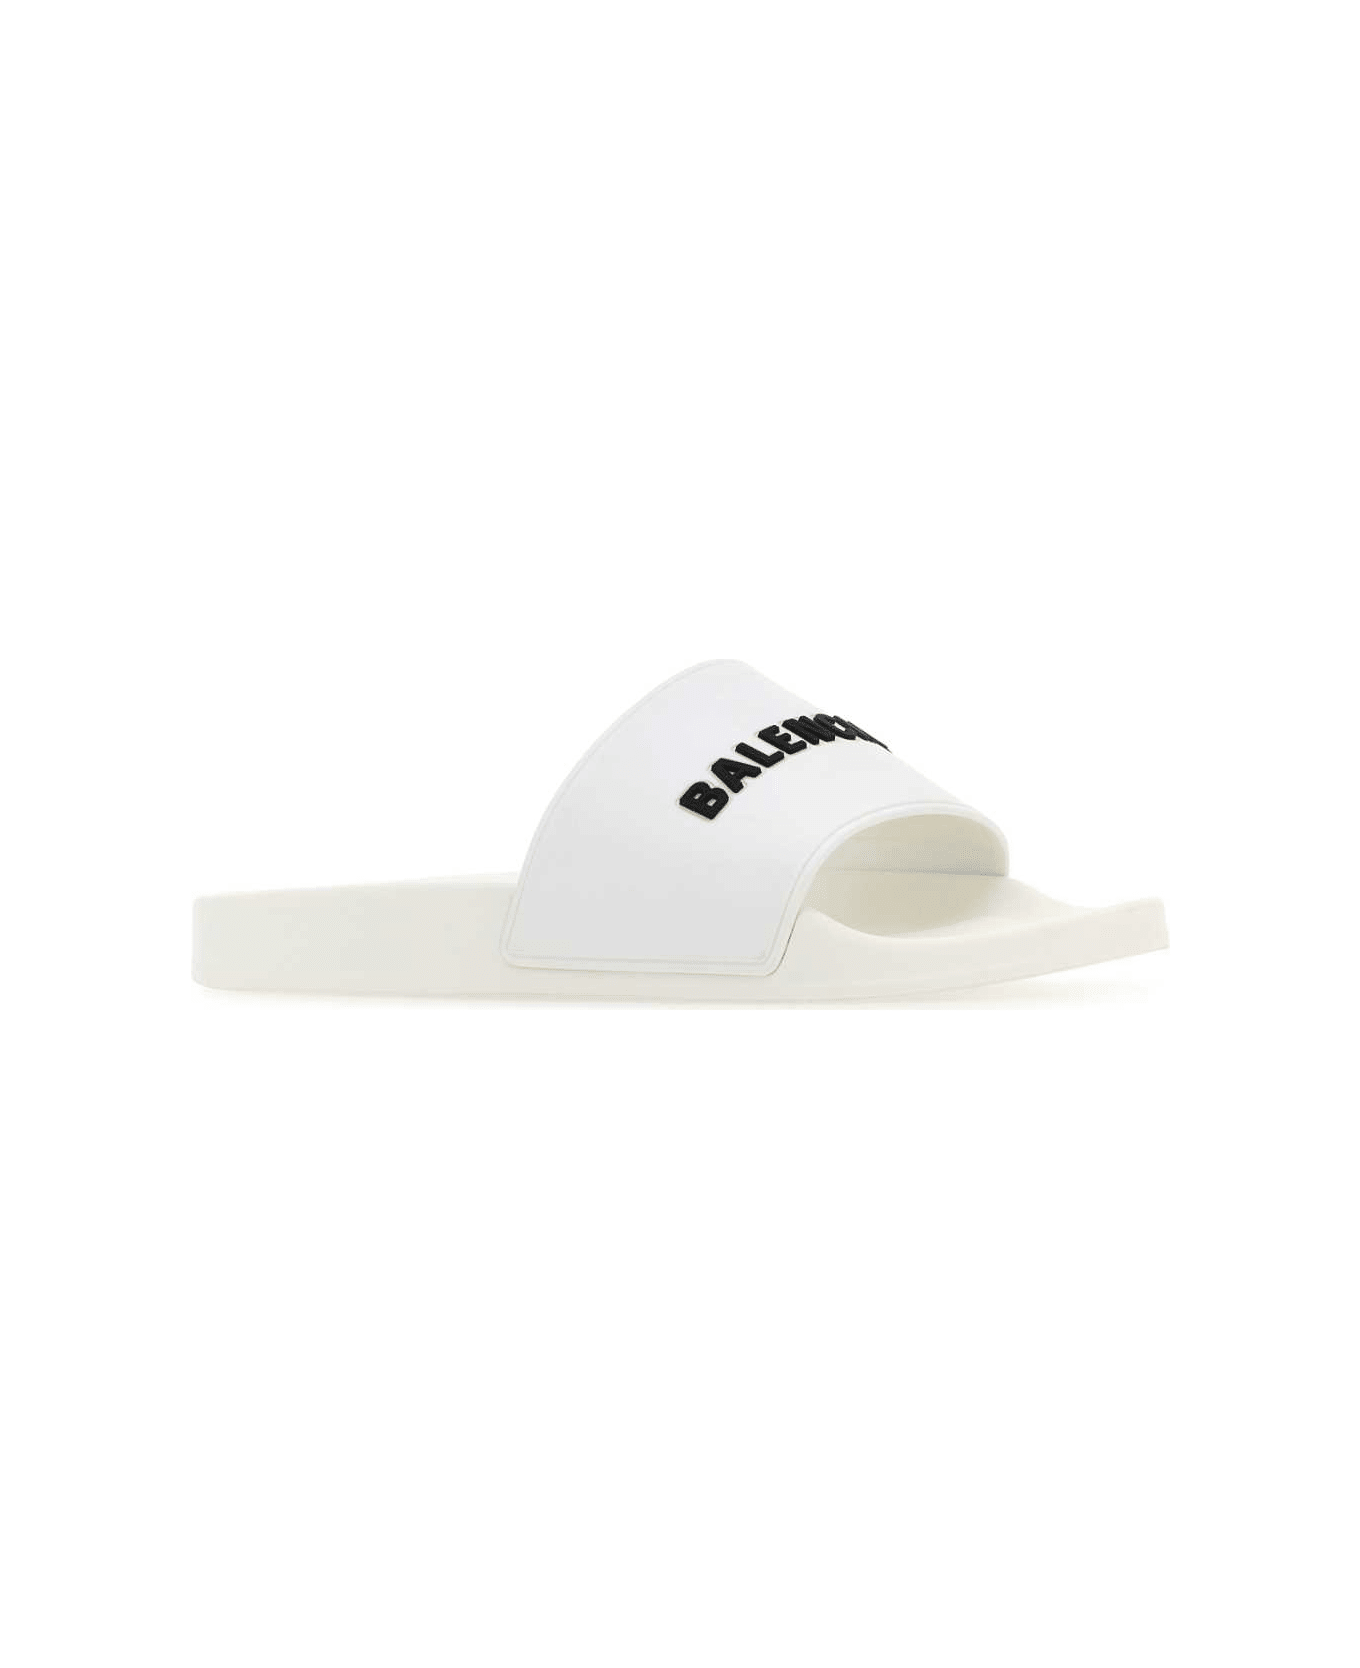 Balenciaga White Rubber Pool Slippers - 9034